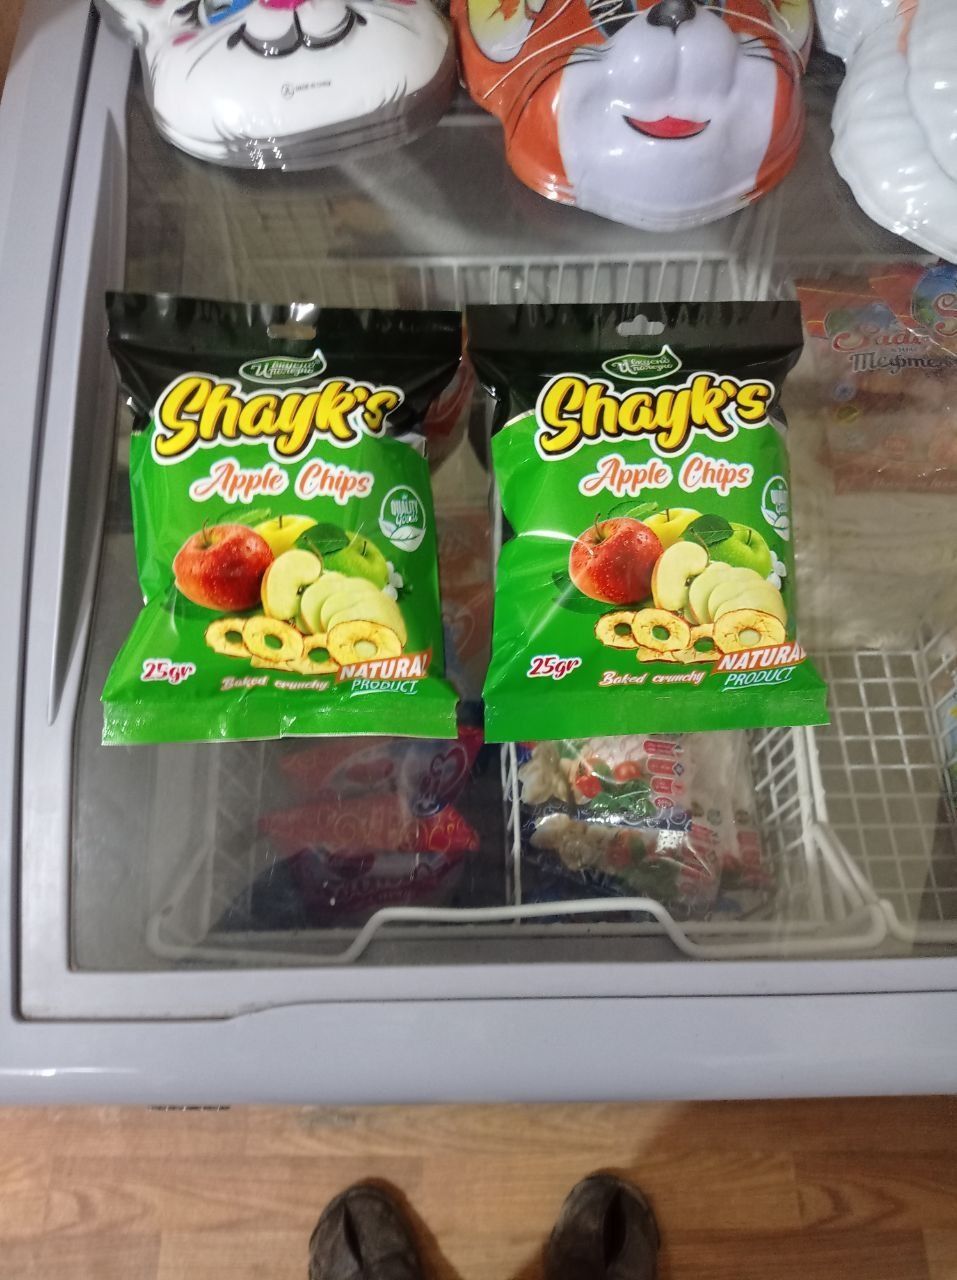 Shayk's apple chips